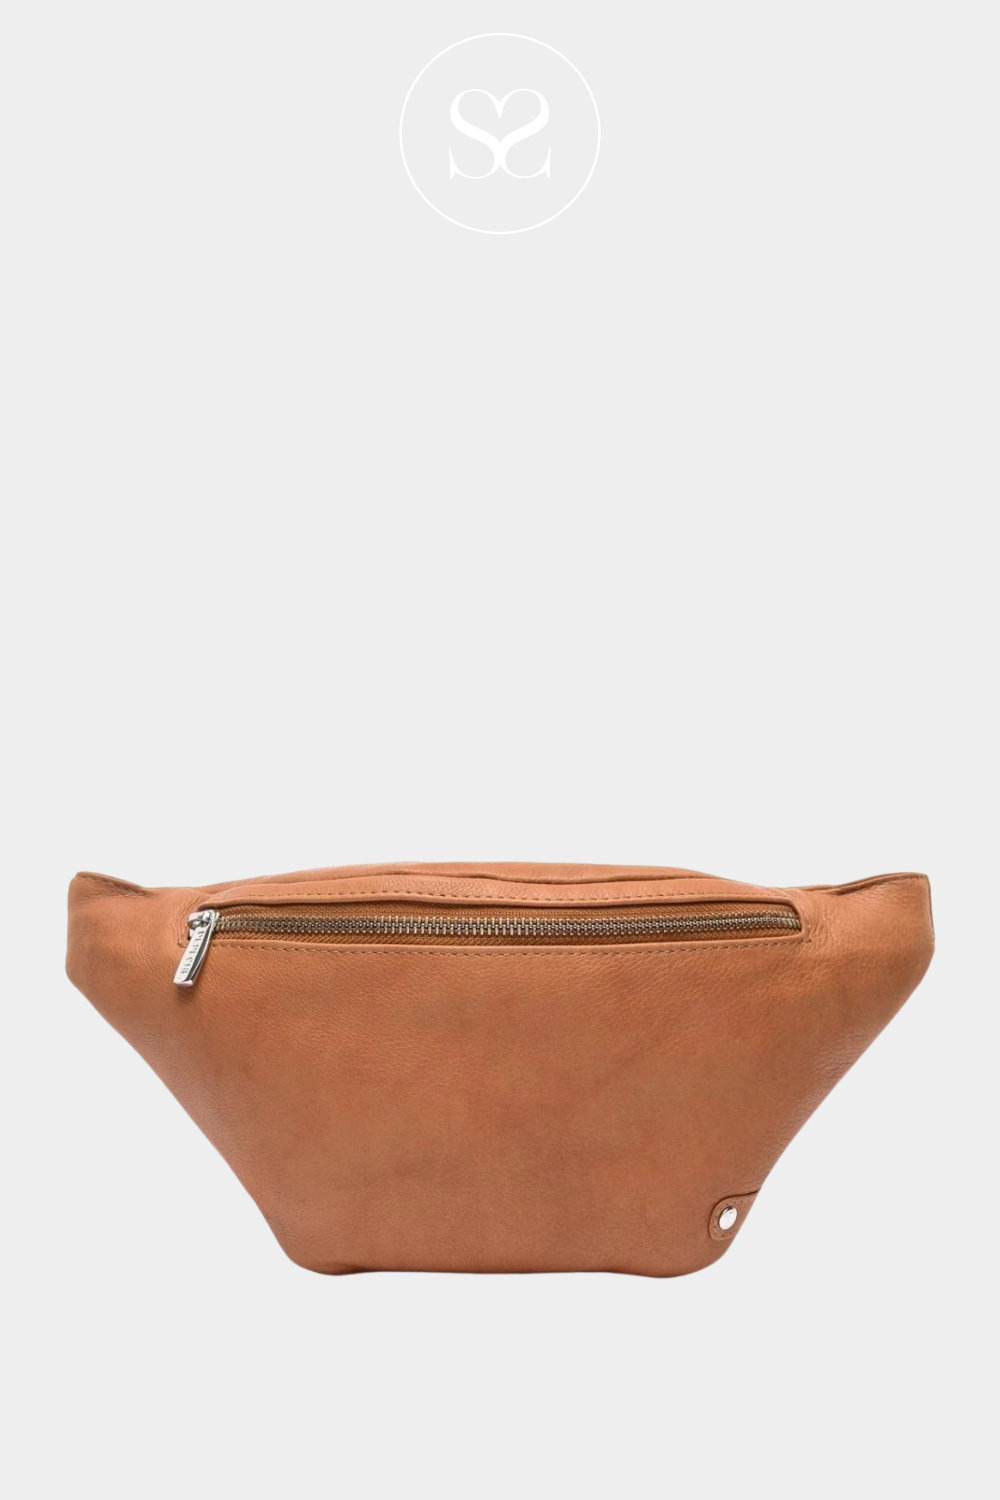 Depeche 12556 brown leather crossbody bum bag